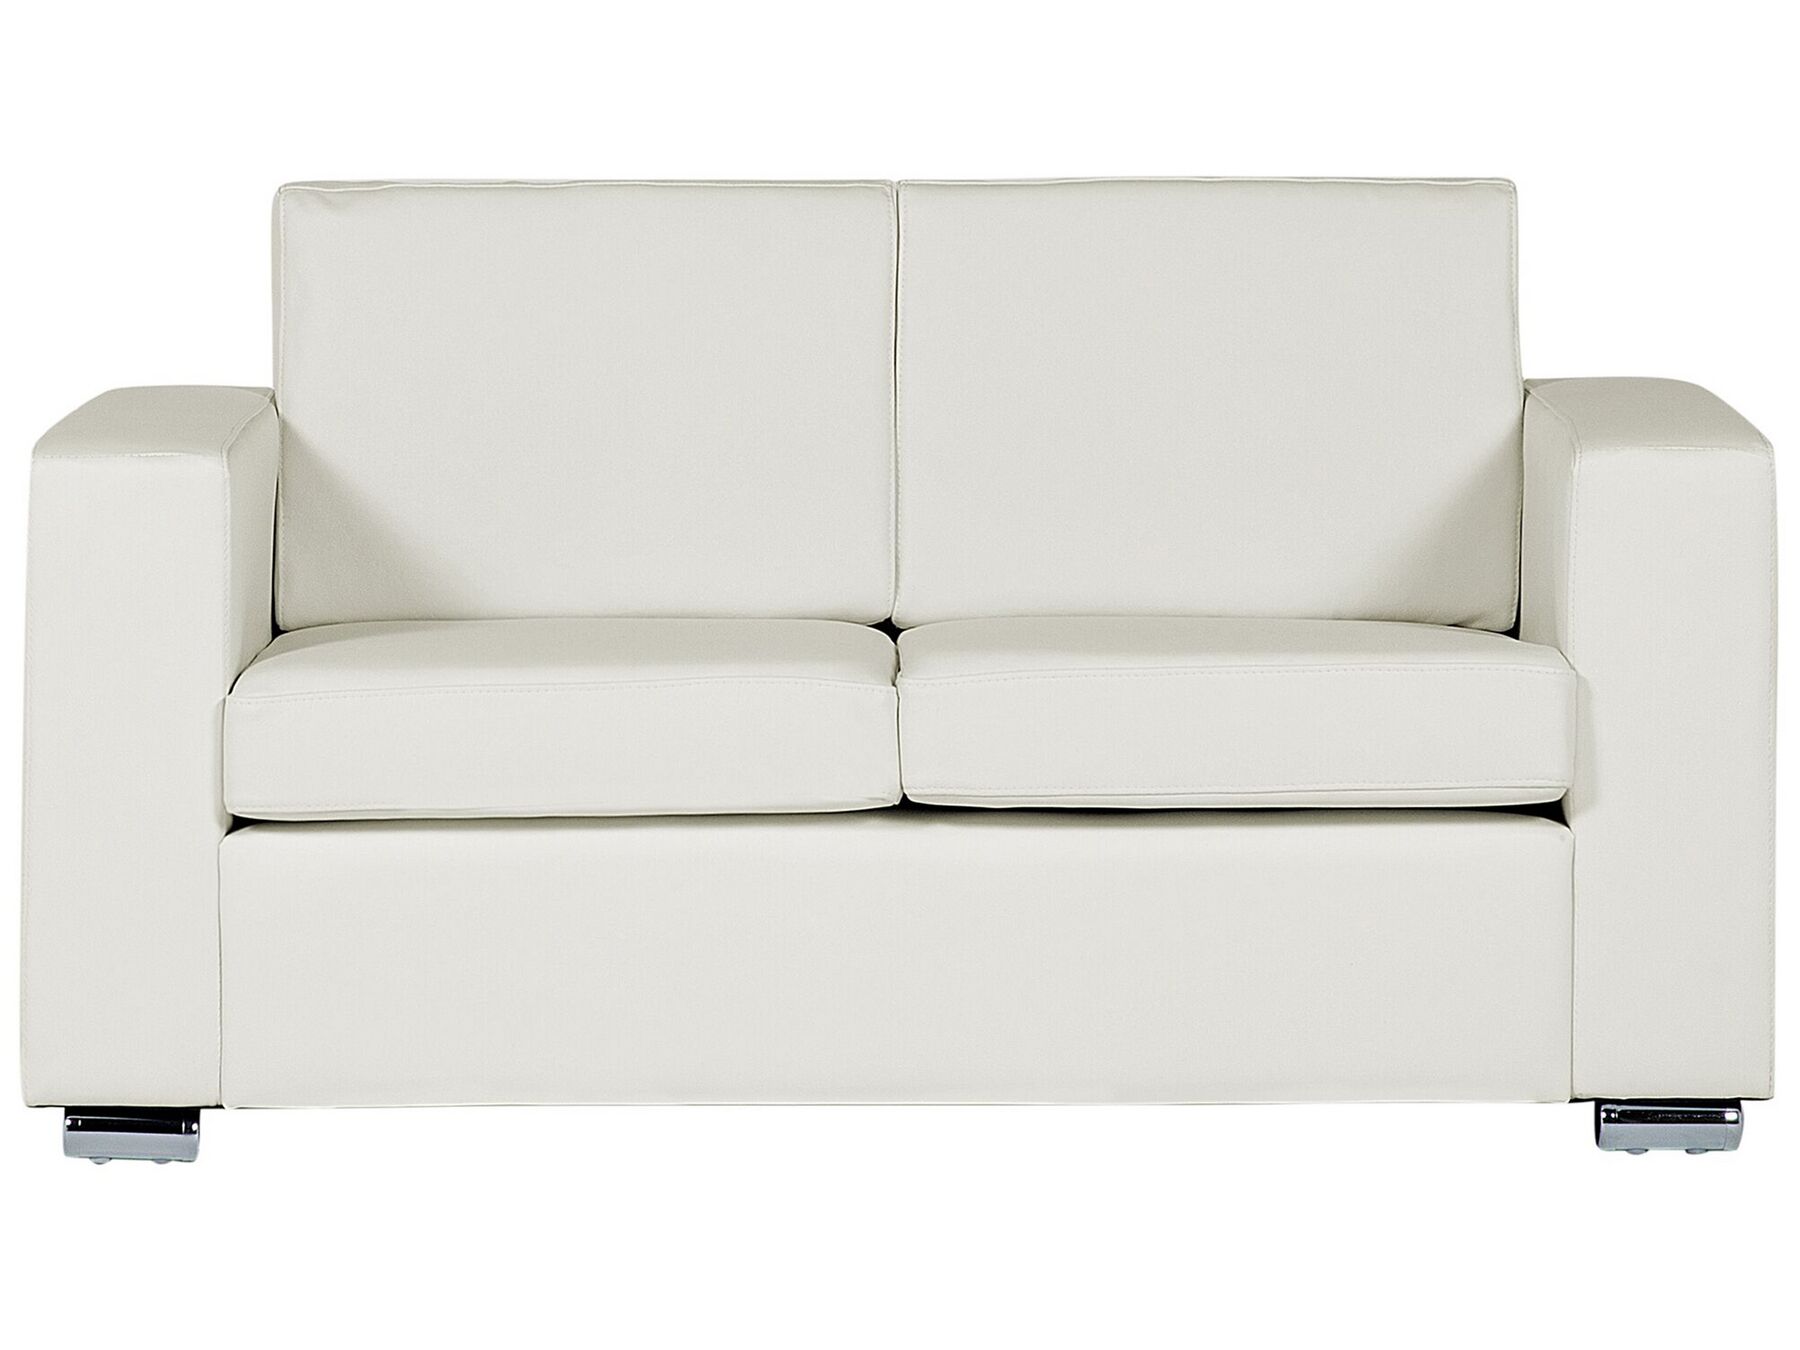 2 Seater Leather Sofa White HELSINKI_813041